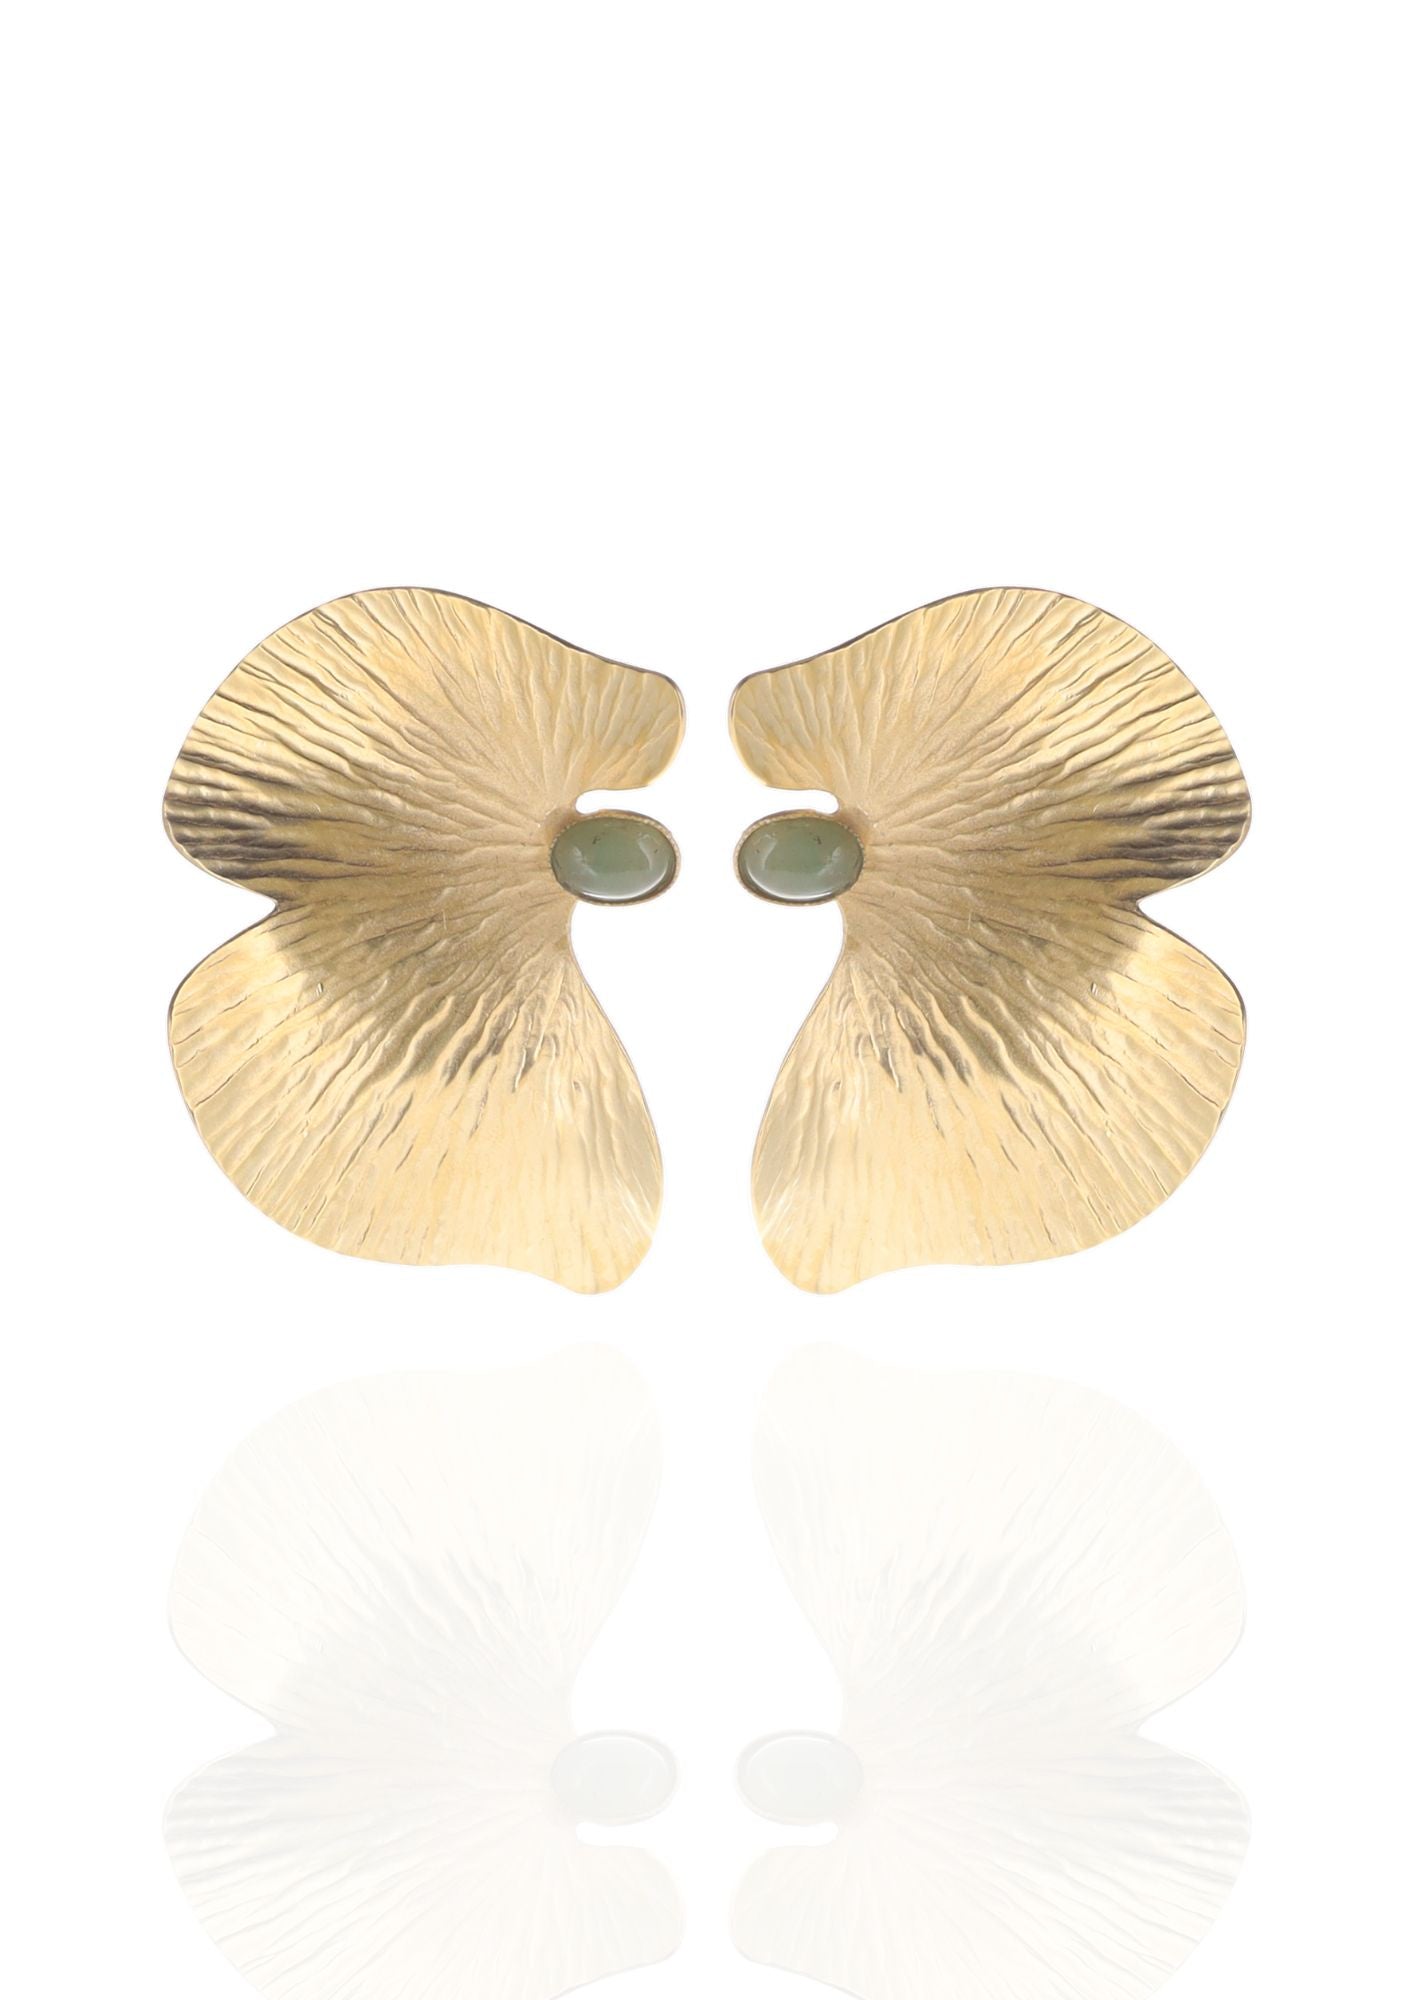 Ginkgo Leaf with Stone Earrings